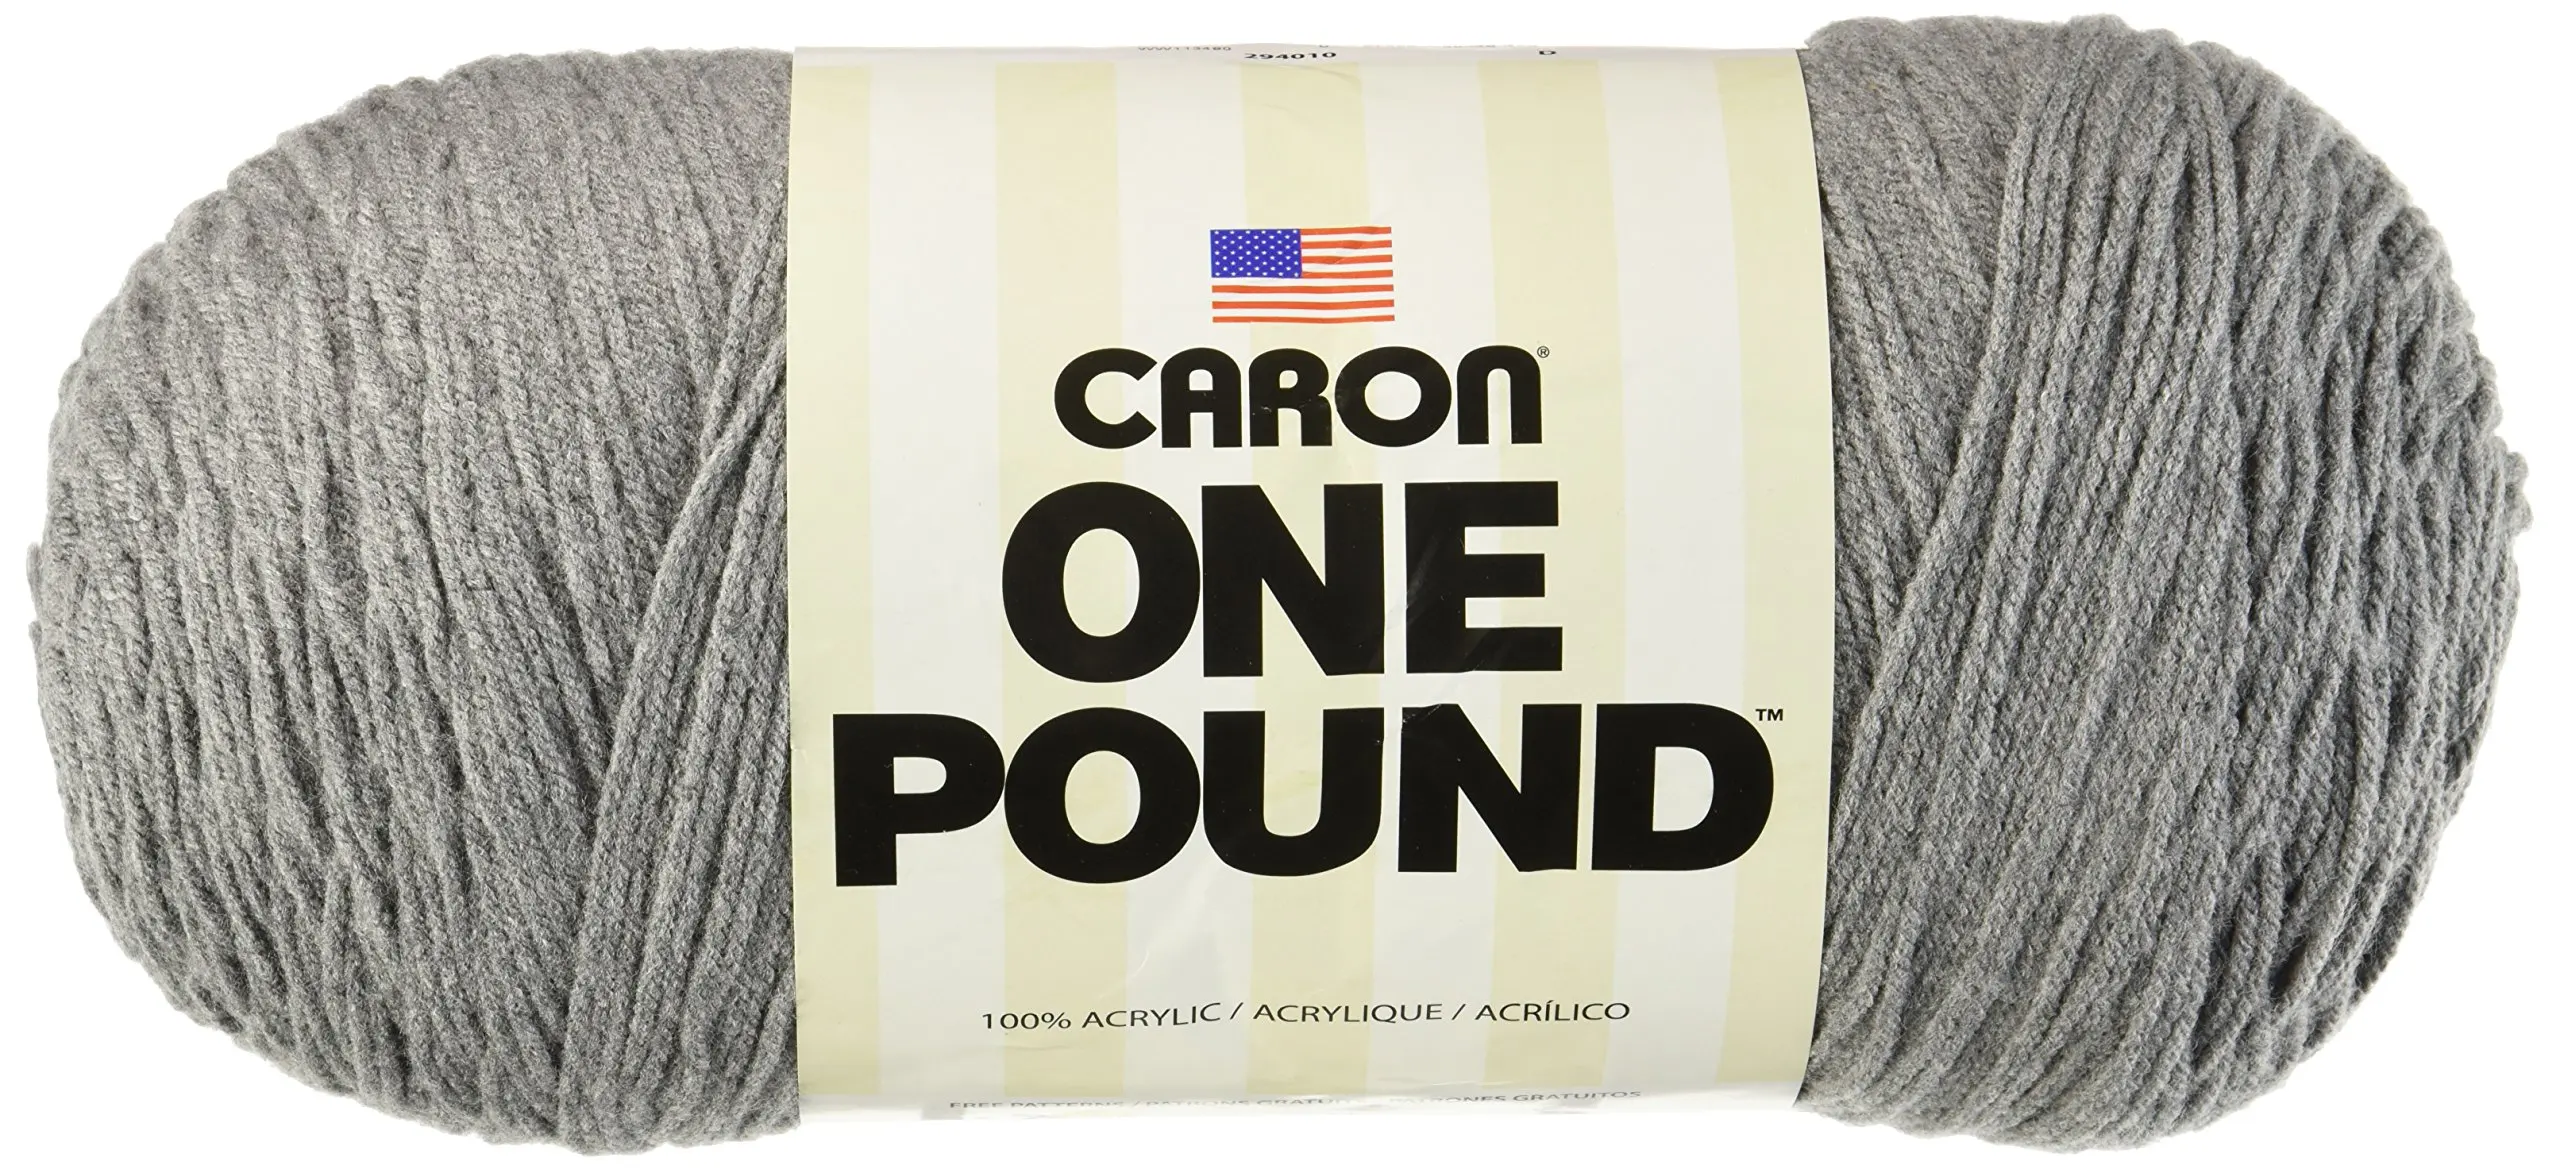 8.99. Caron One Pound Solids Yarn - (4) Medium Gauge 100% Acrylic - 16 oz -...